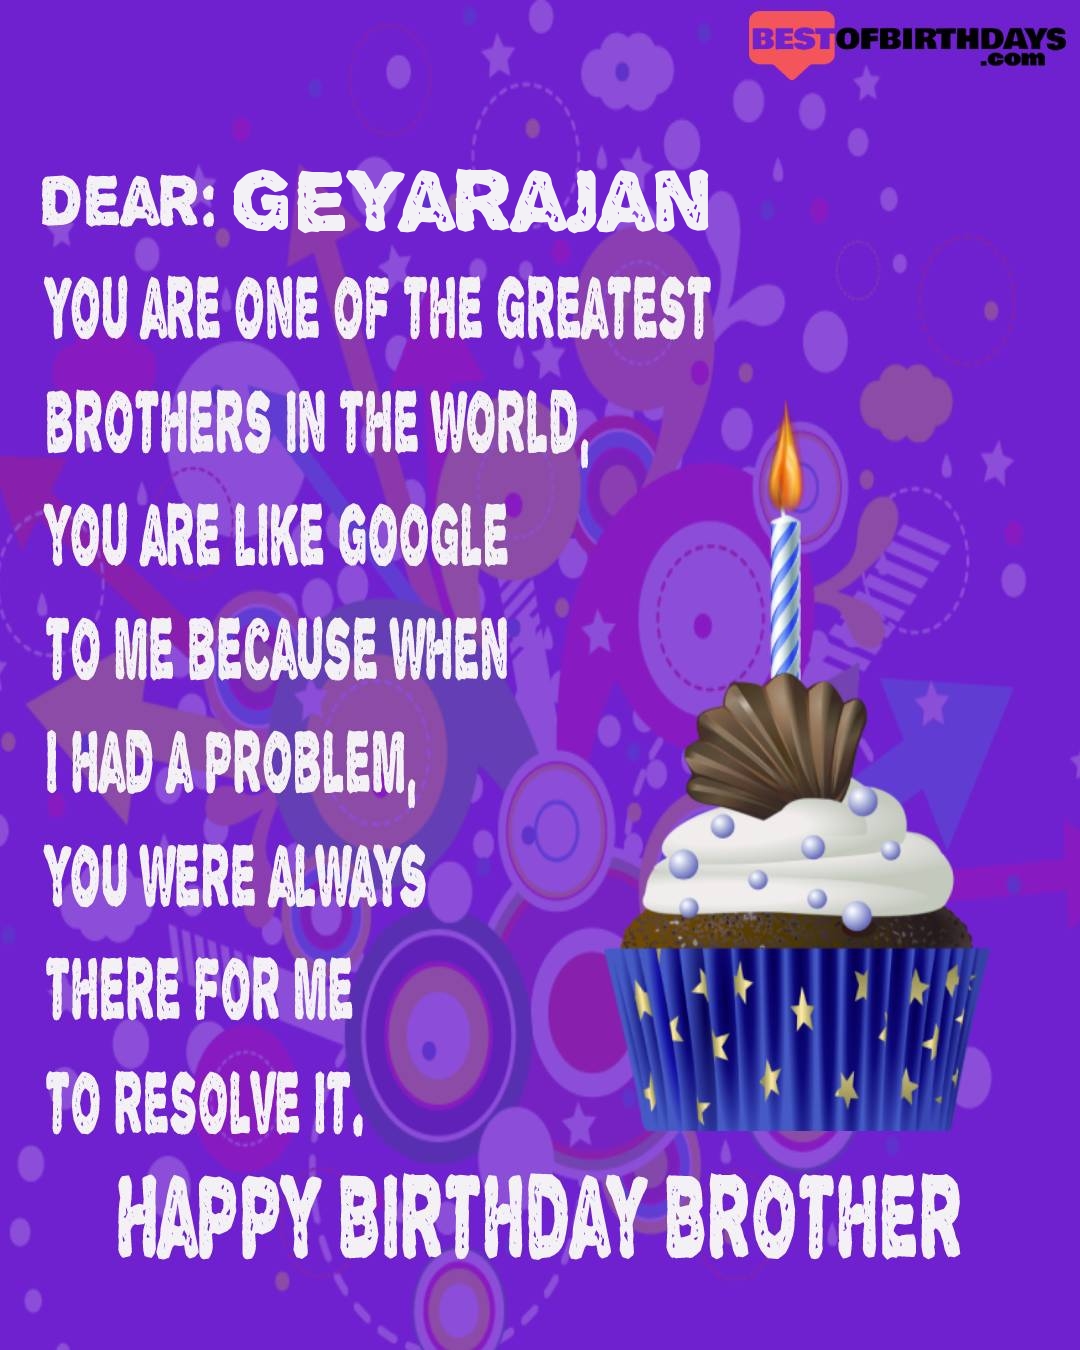 Happy birthday geyarajan bhai brother bro